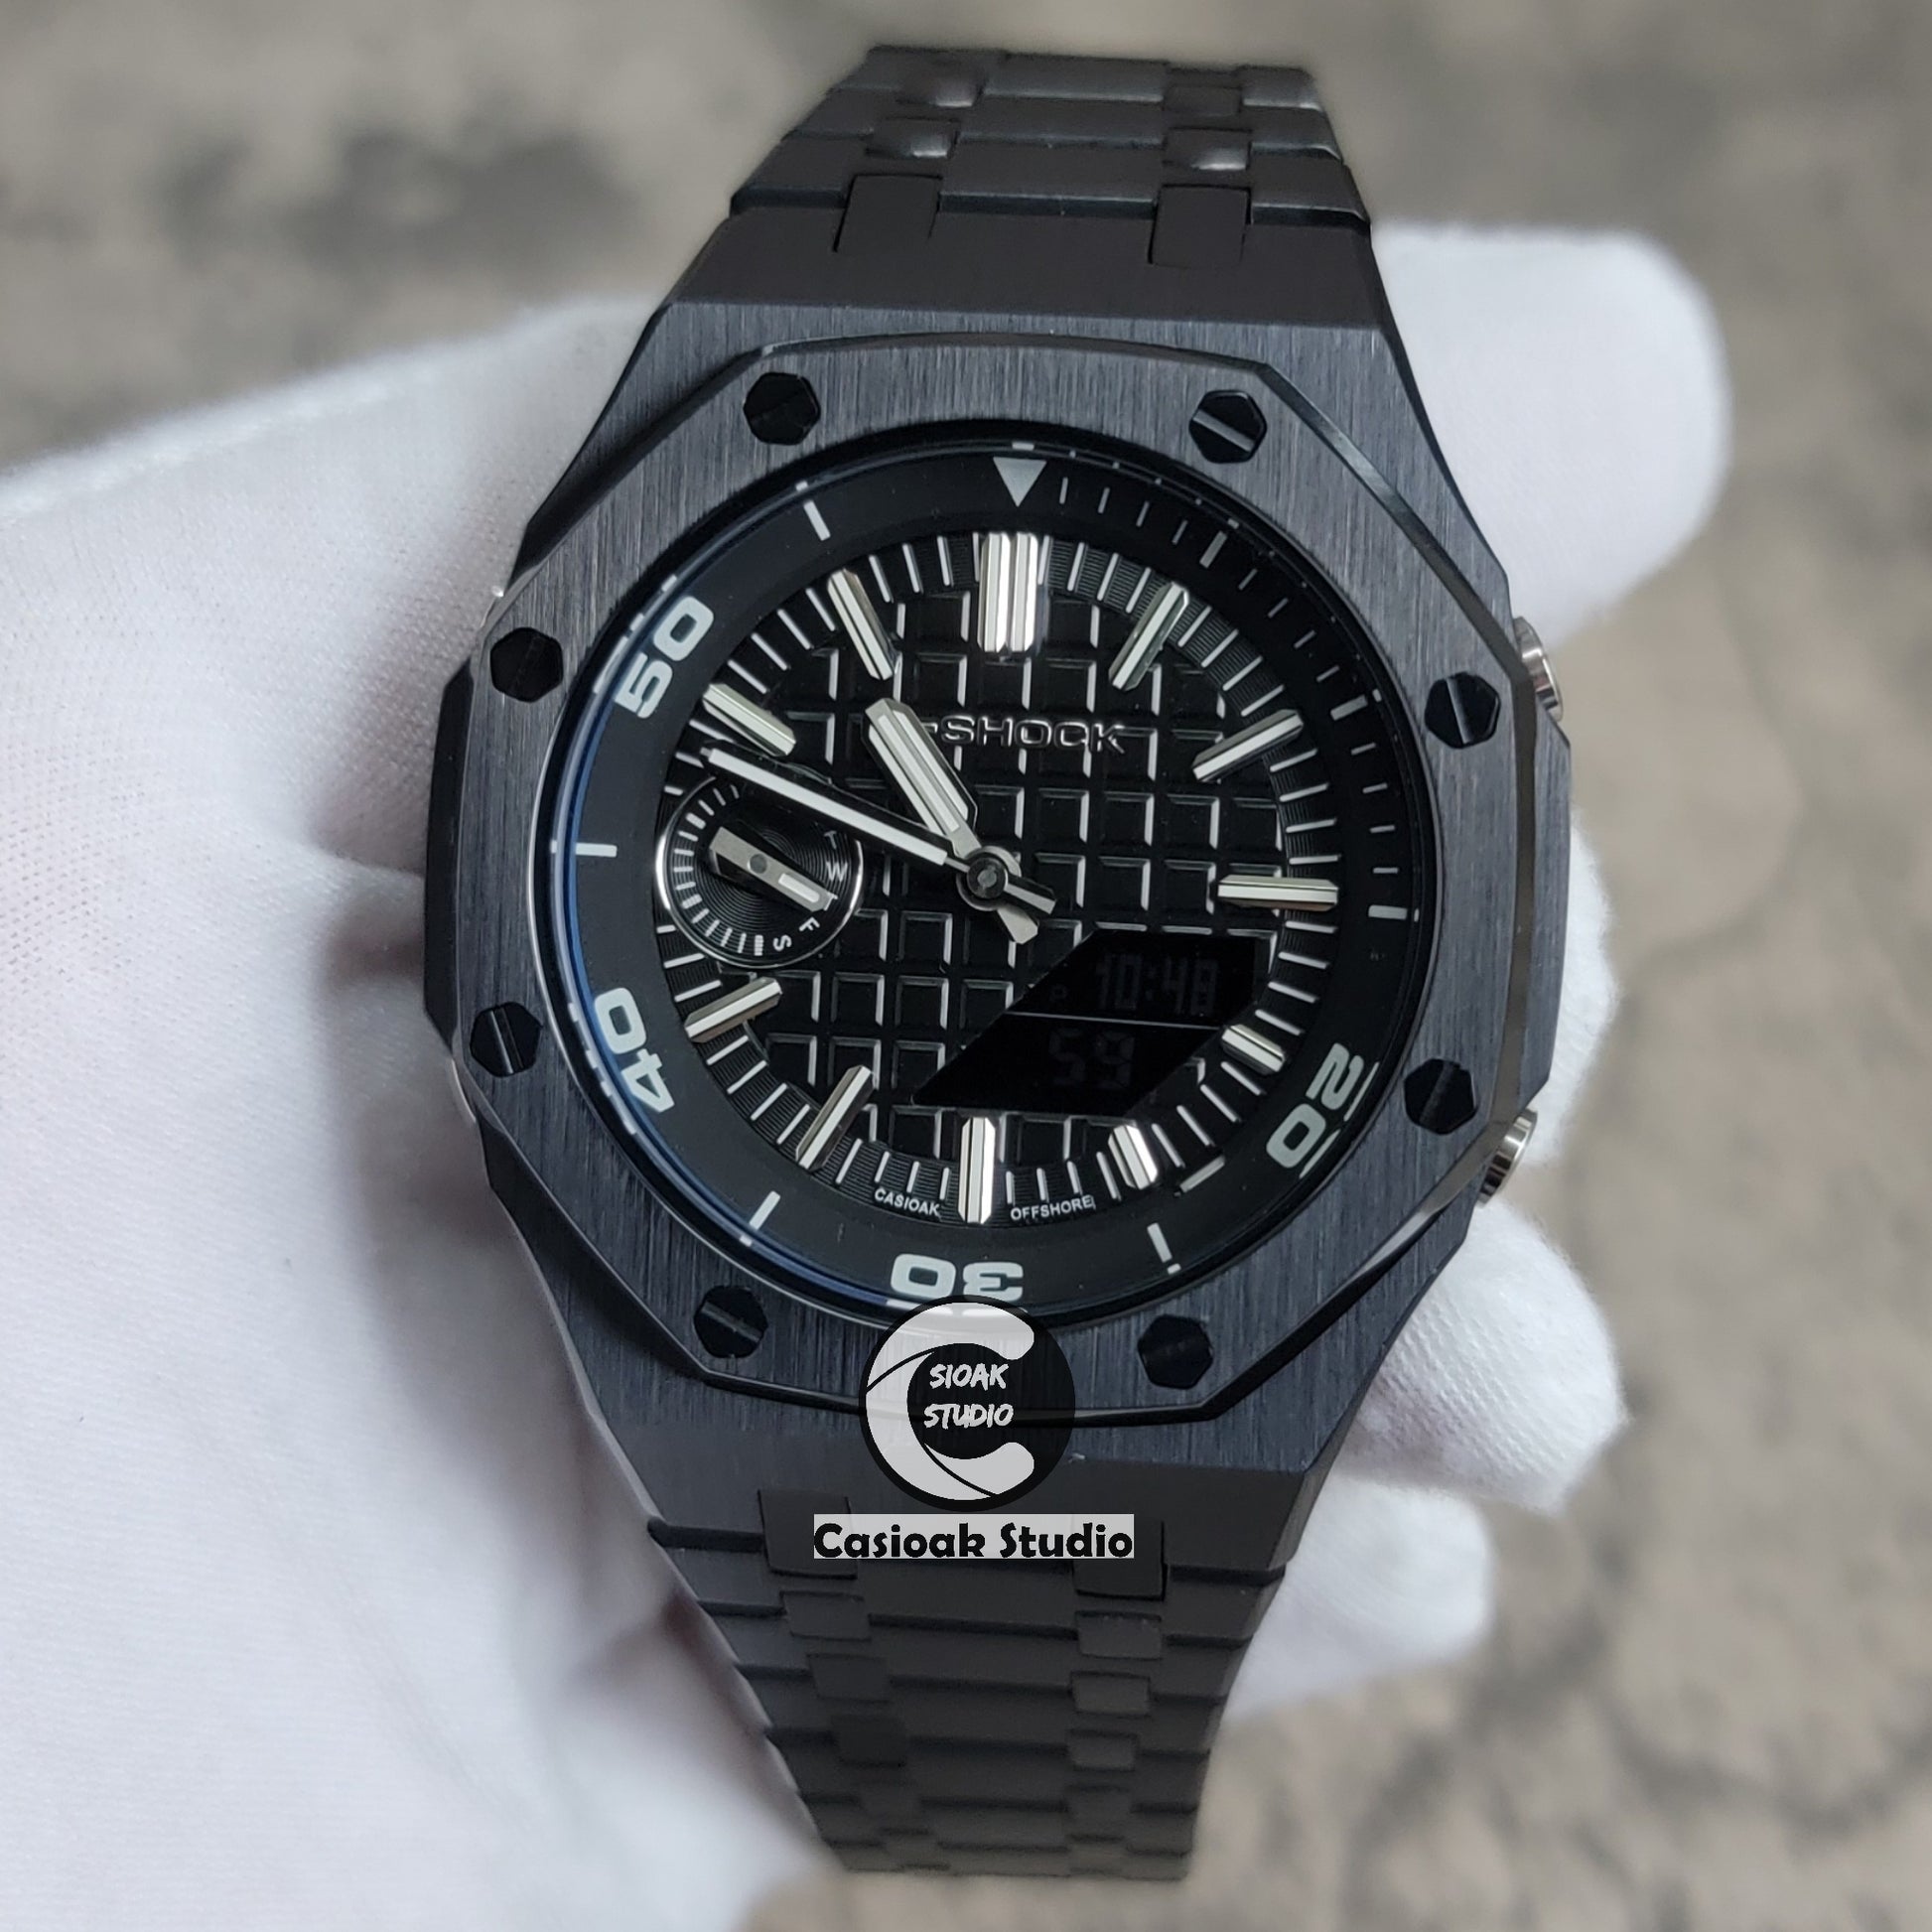 Casioak Mod Watch NEW Black Case Metal Strap Black Silver Time Mark Black Dial 44mm Sapphire Glass - Casioak Studio